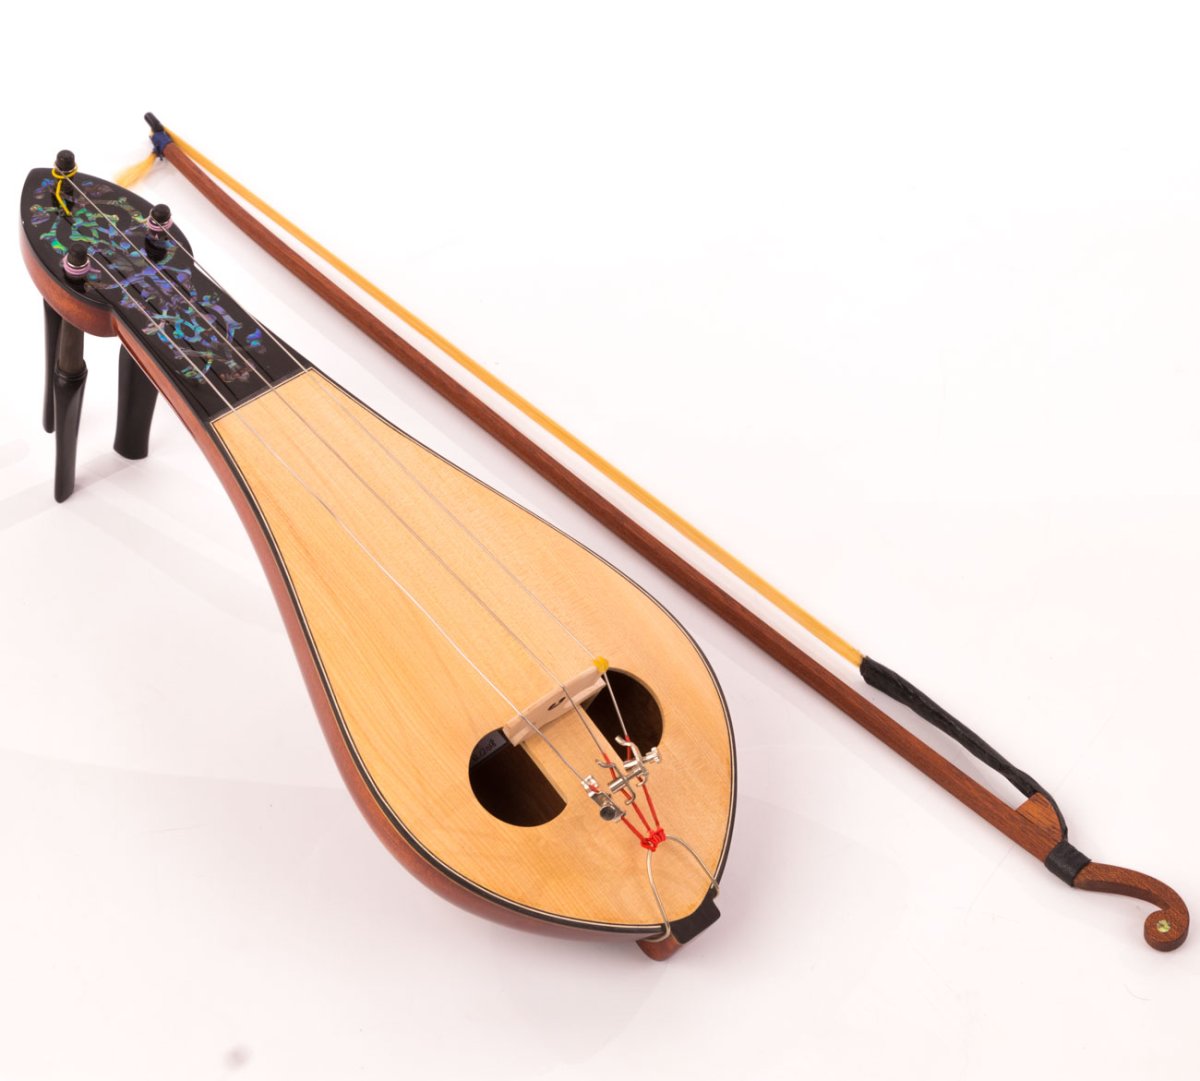 Турецкий инструмент кеманча